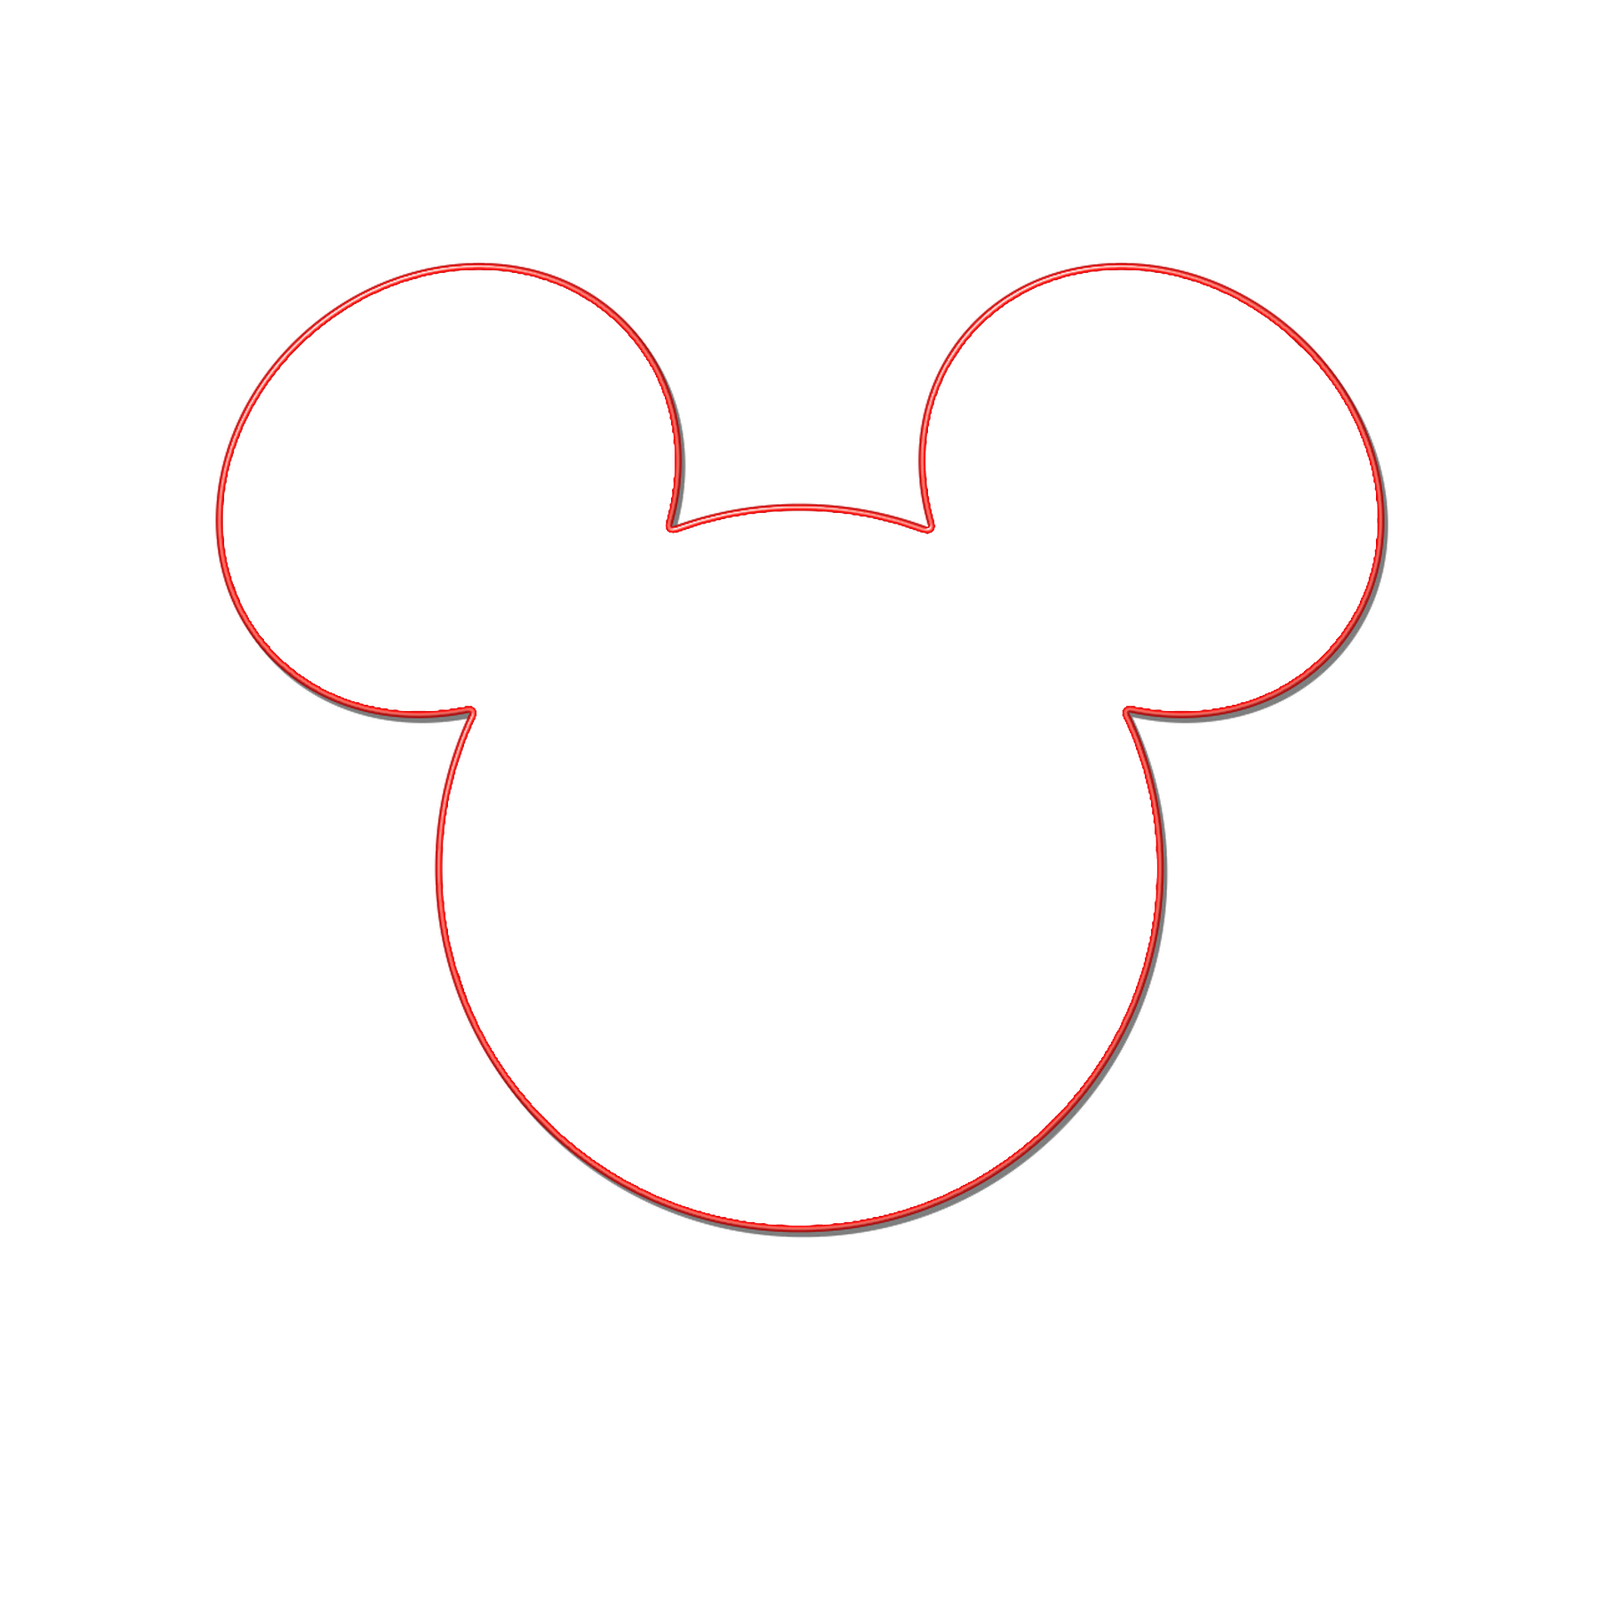 Mickey mouse logo clipart - ClipartFox